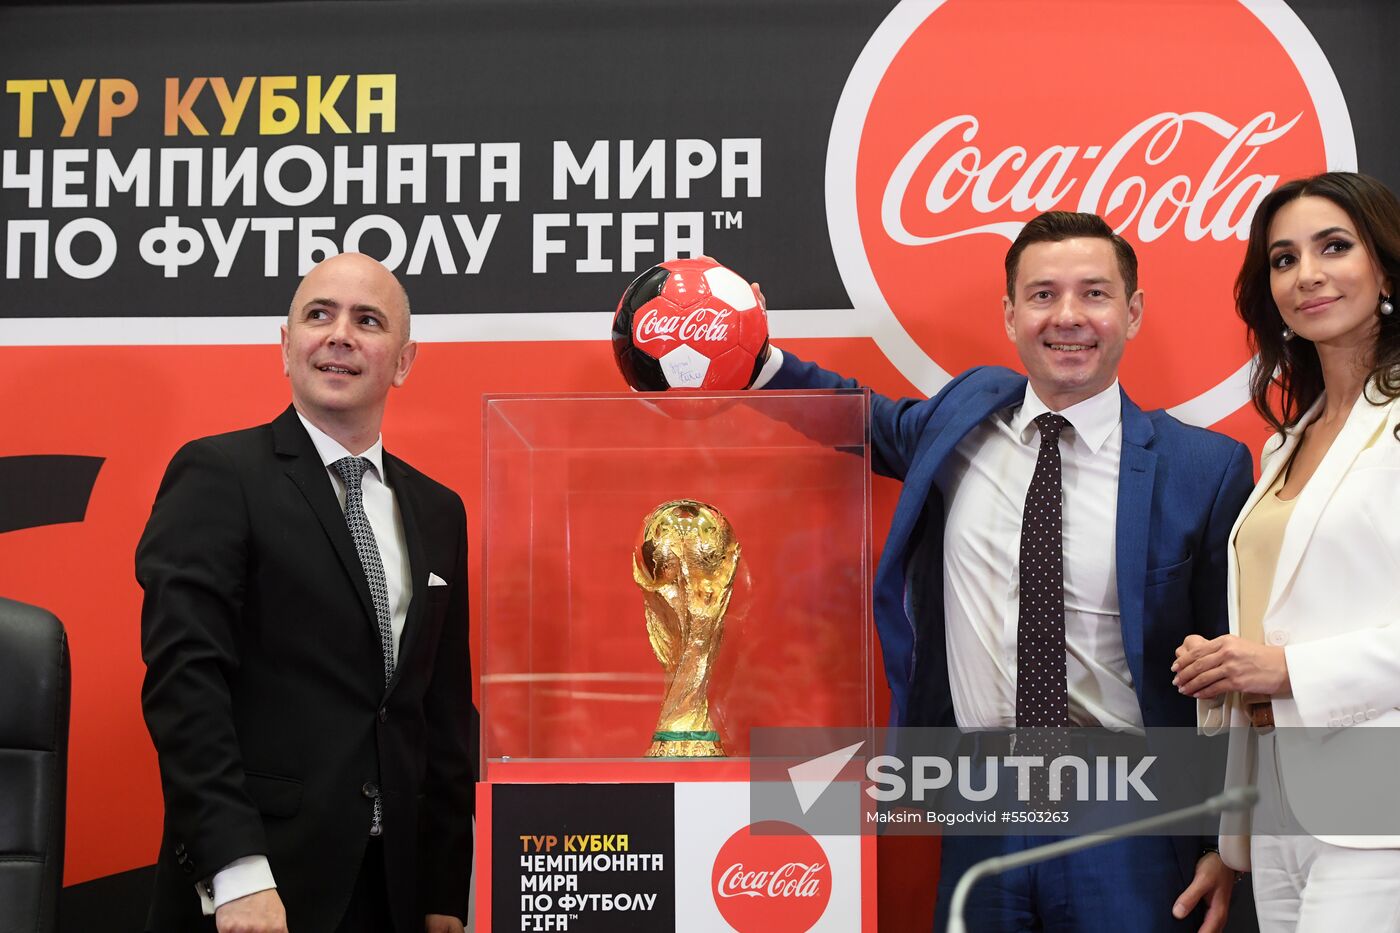 2018 FIFA World Cup trophy presented in Kazan